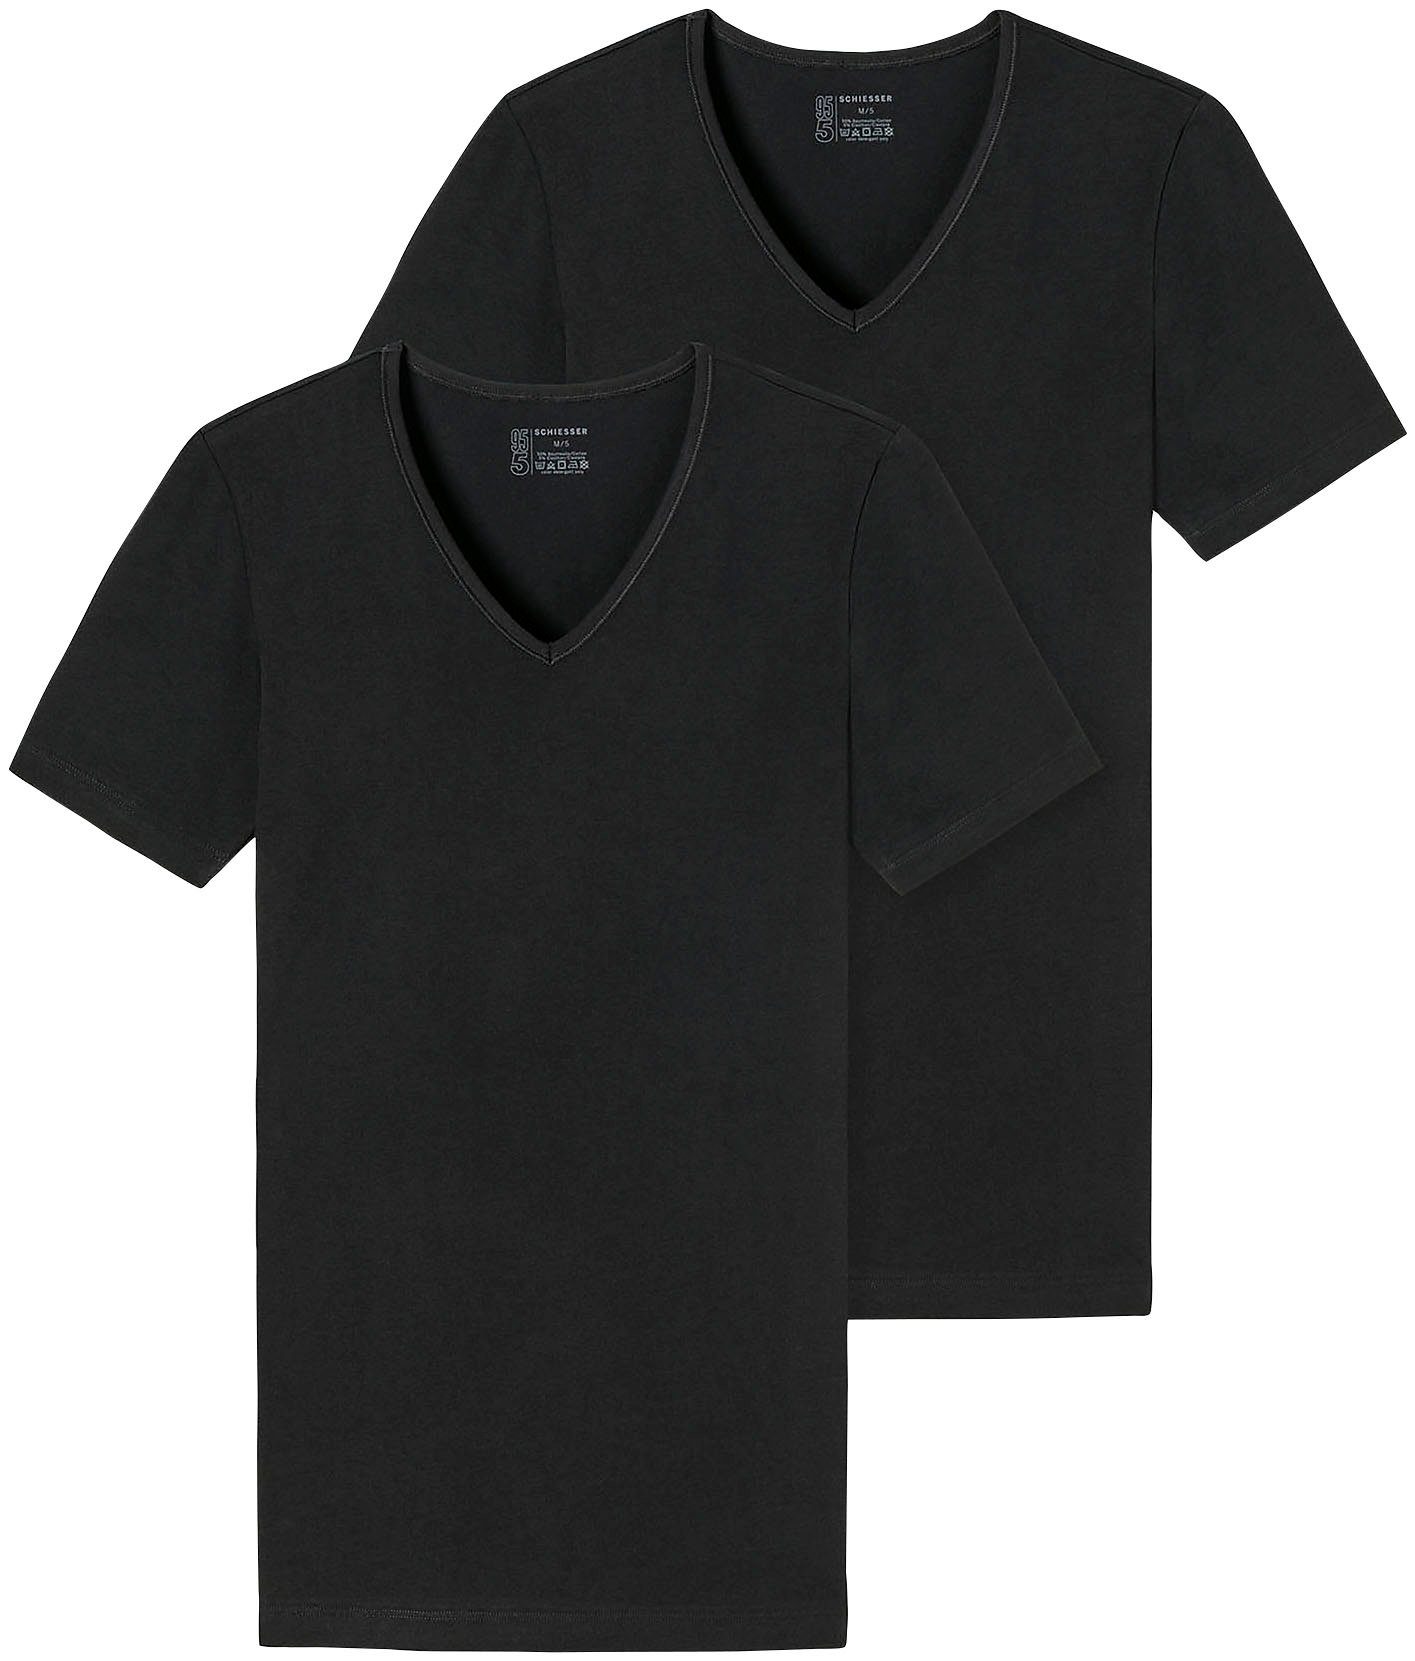 (2er-Pack) V-Ausschnitt mit schwarz Schiesser V-Shirt